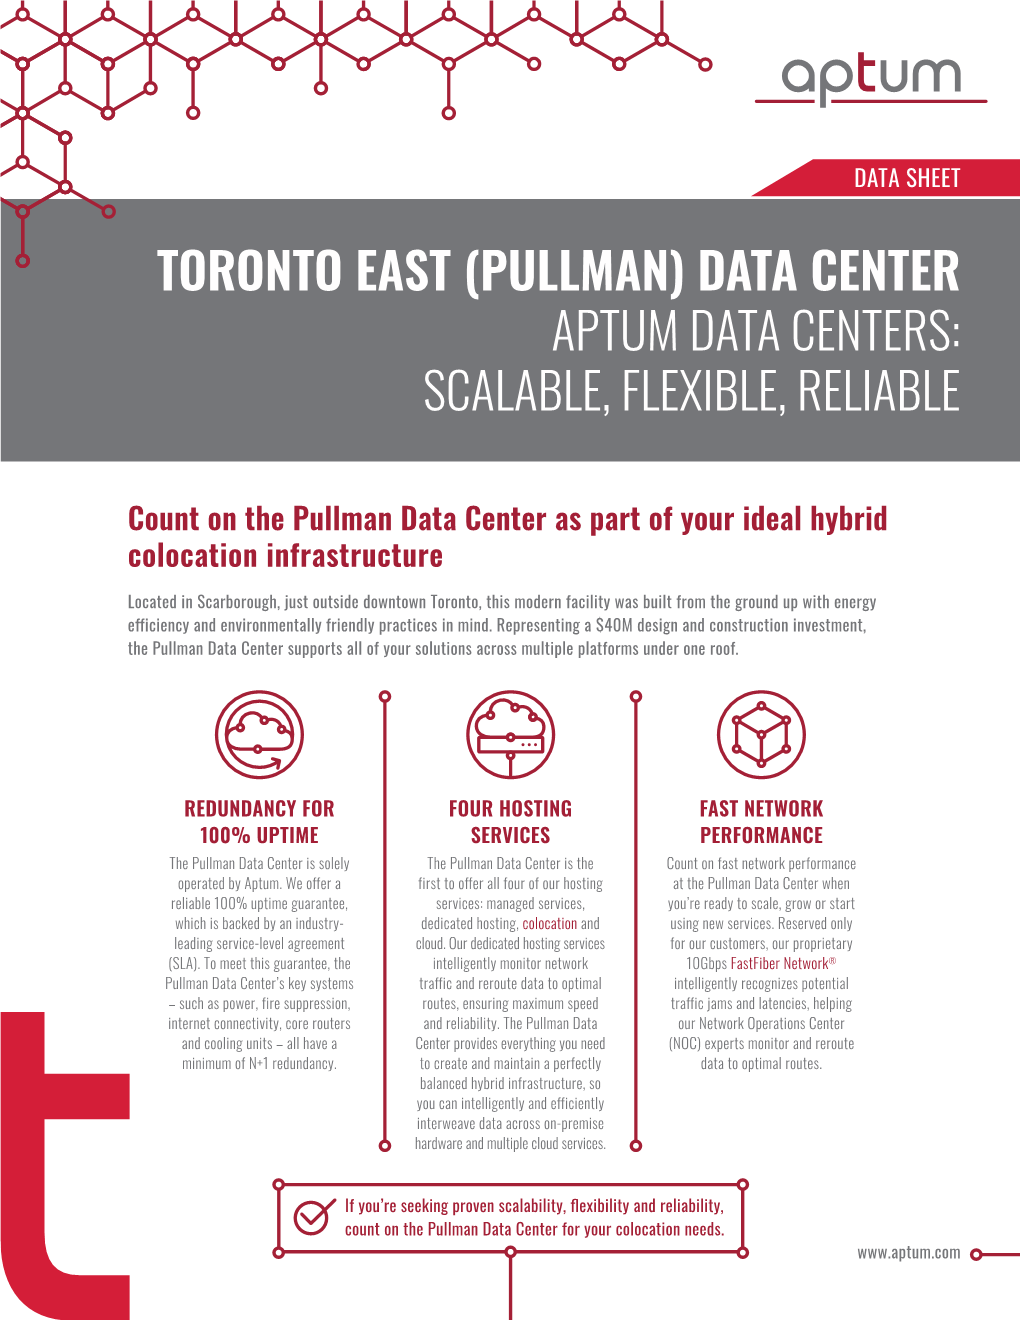 Pullman) Data Center Aptum Data Centers: Scalable, Flexible, Reliable